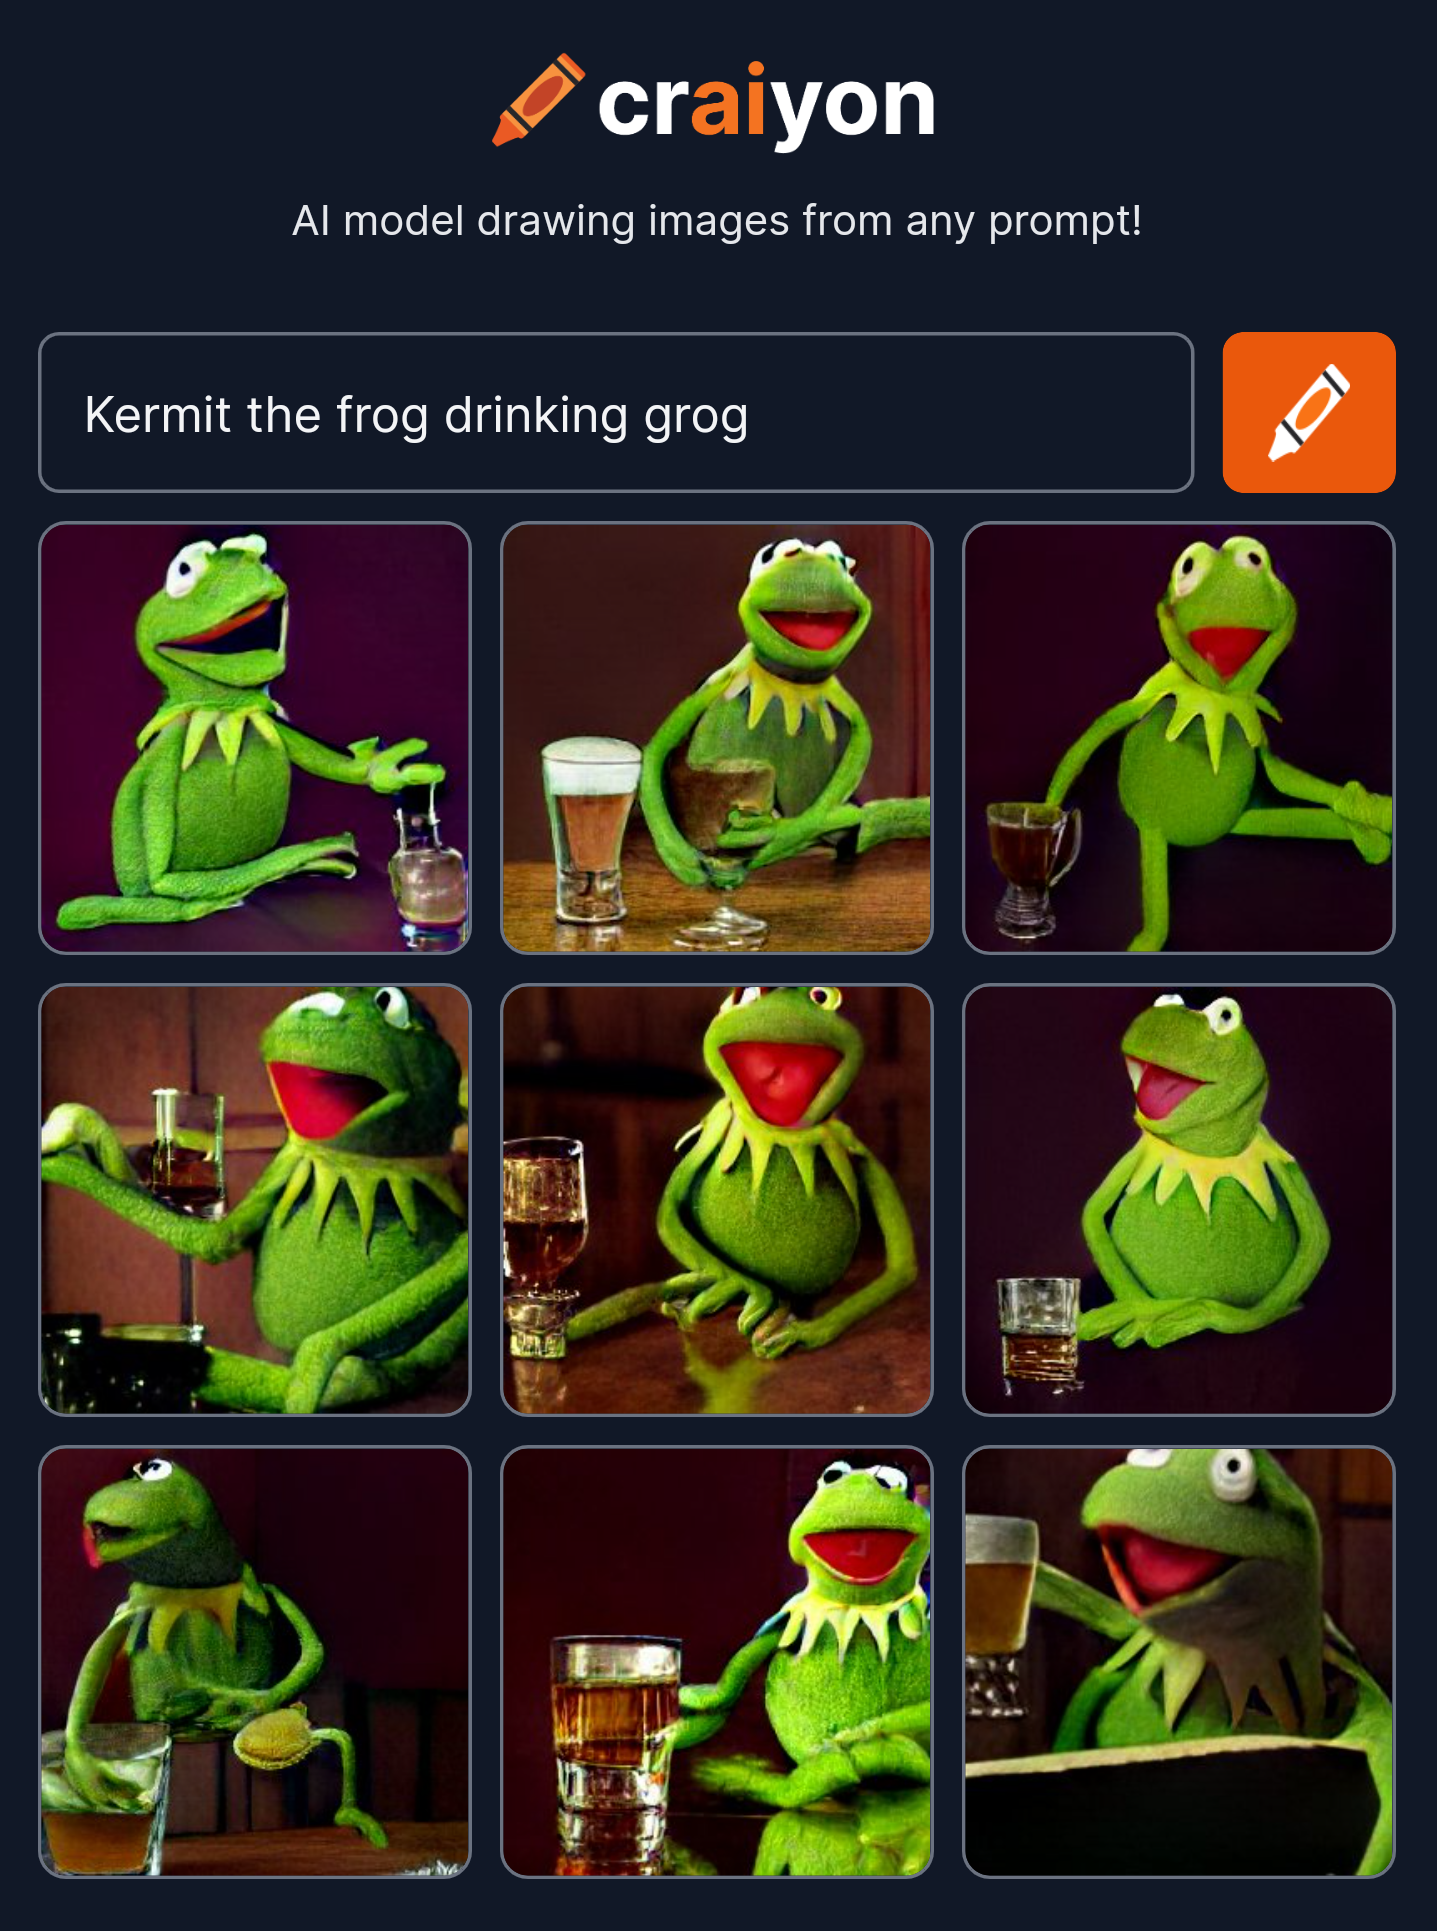 craiyon_210506_Kermit_the_frog_drinking_grog.png